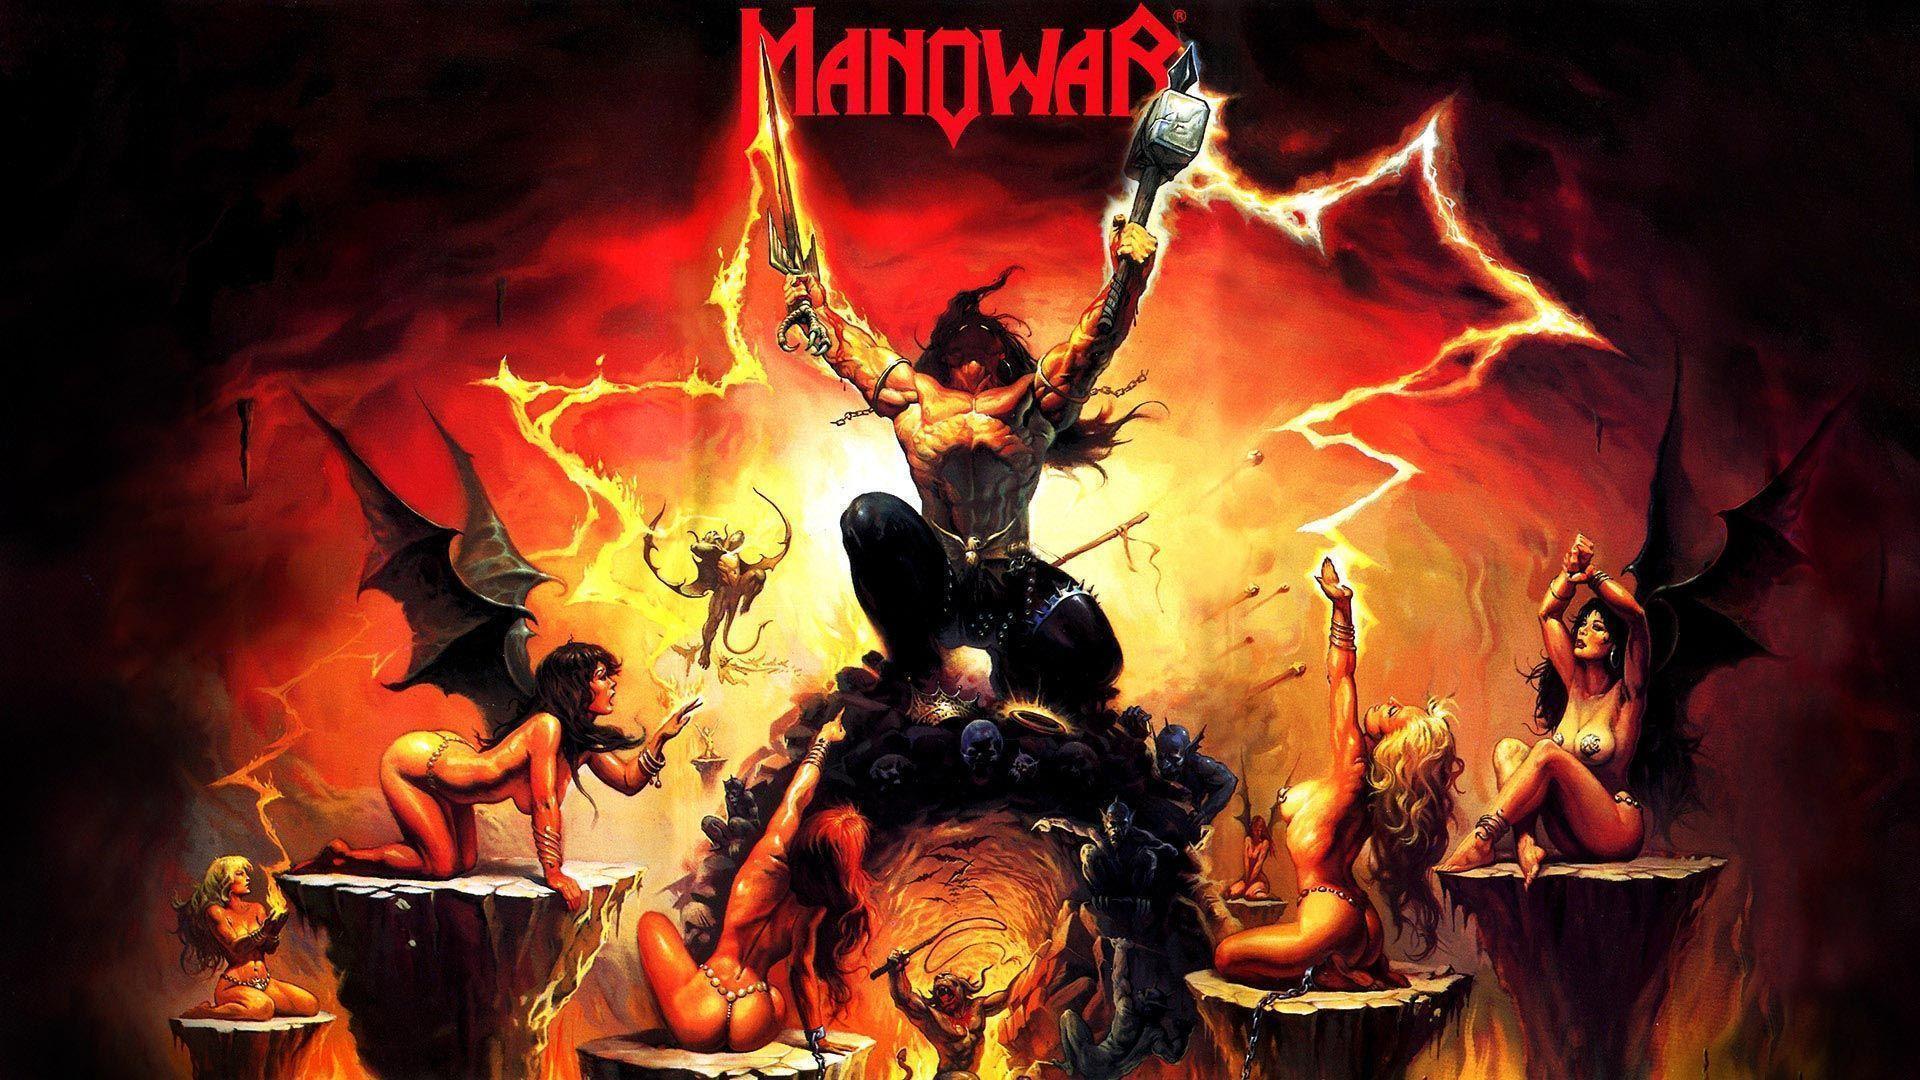 Gods of War Manowar album - Wikipedia